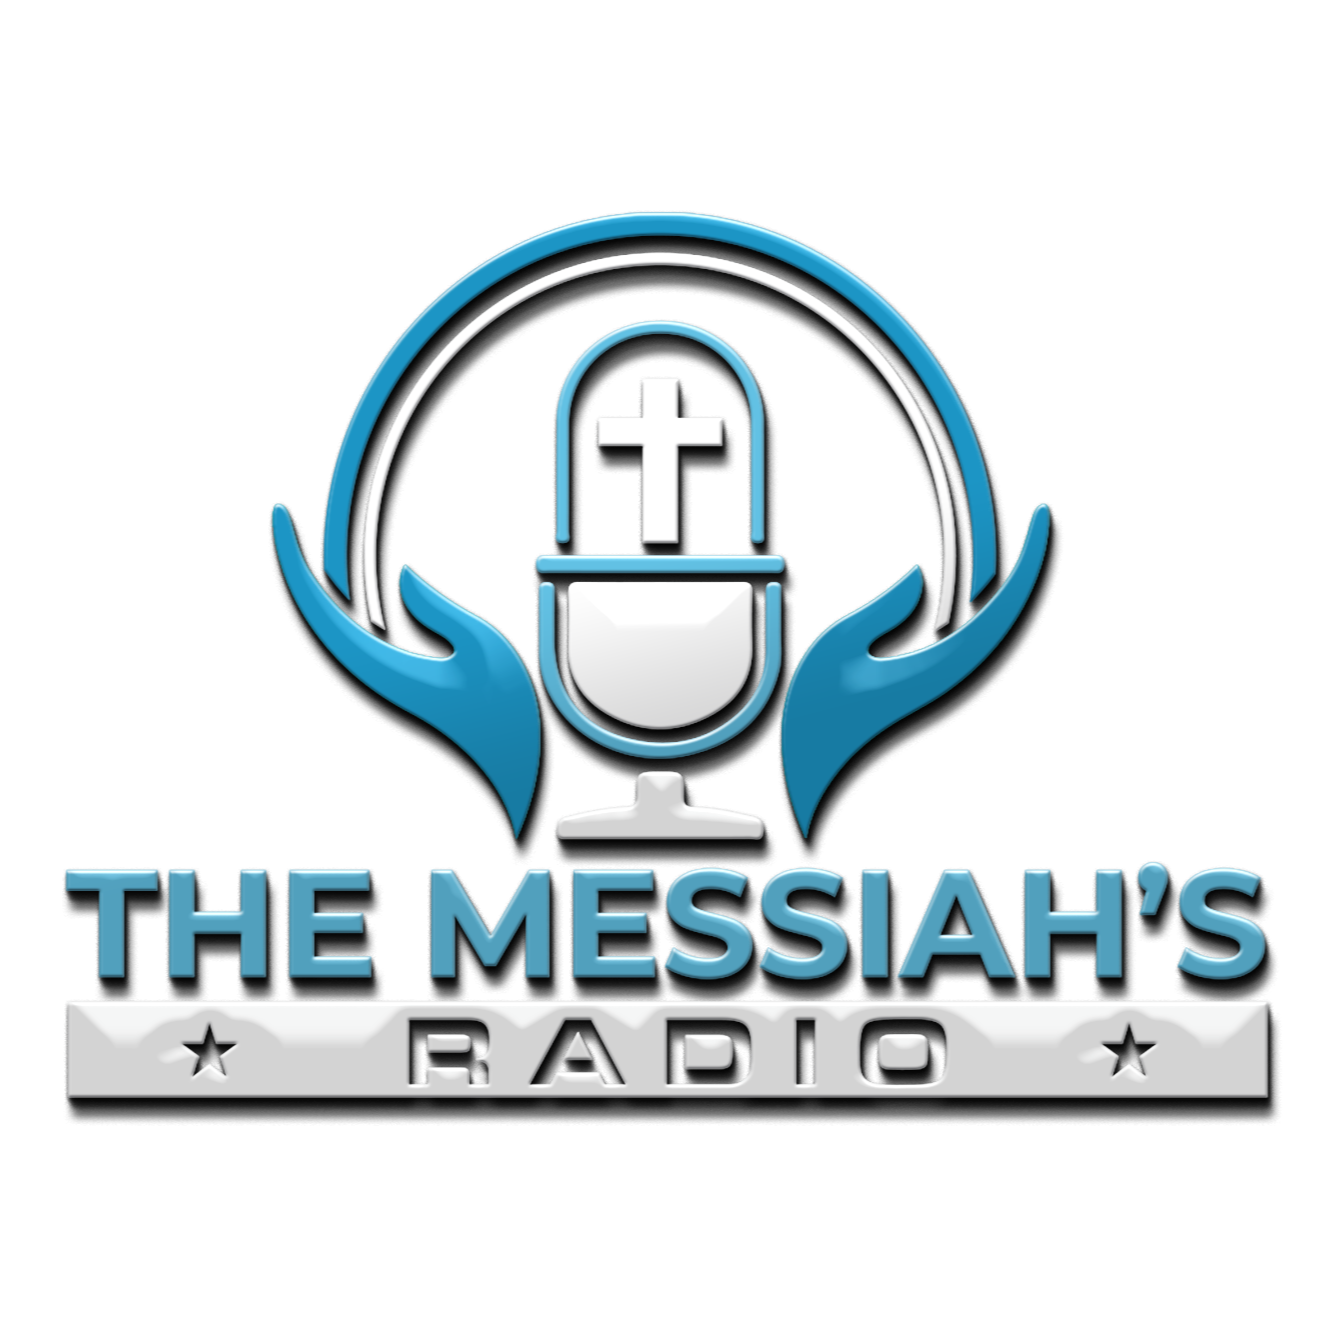 The Messiah's Radio